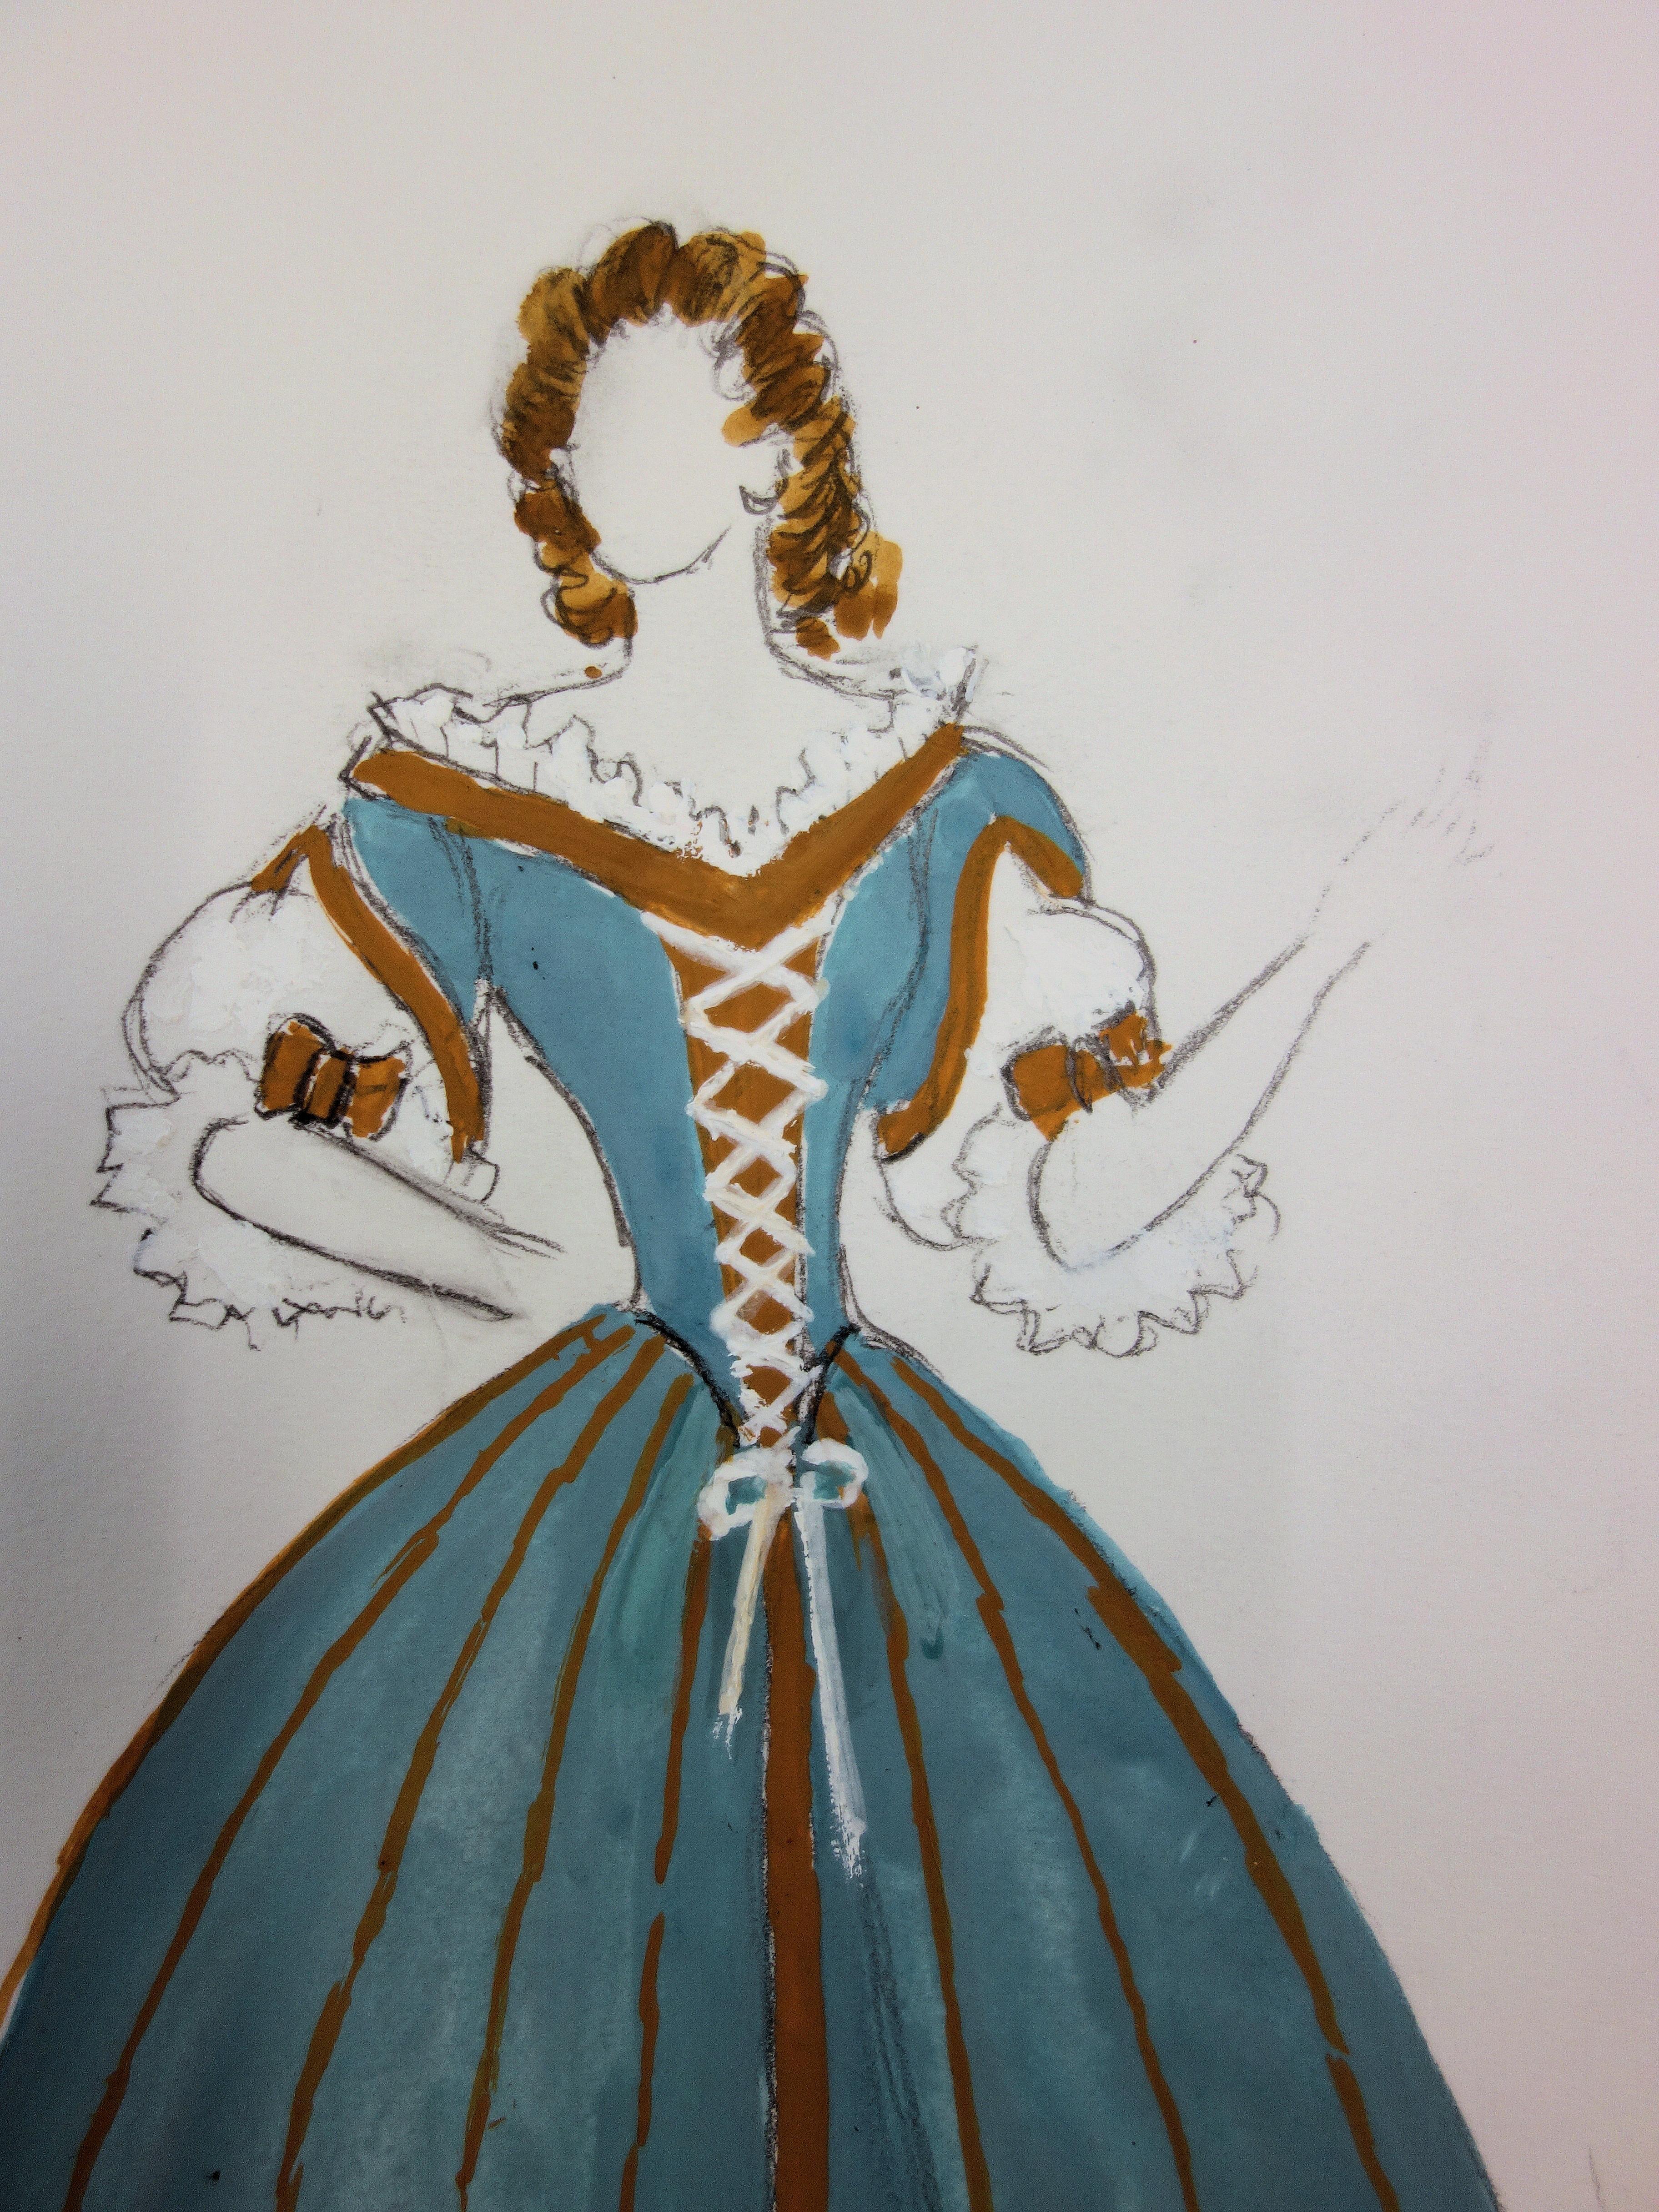 18th century women's dress